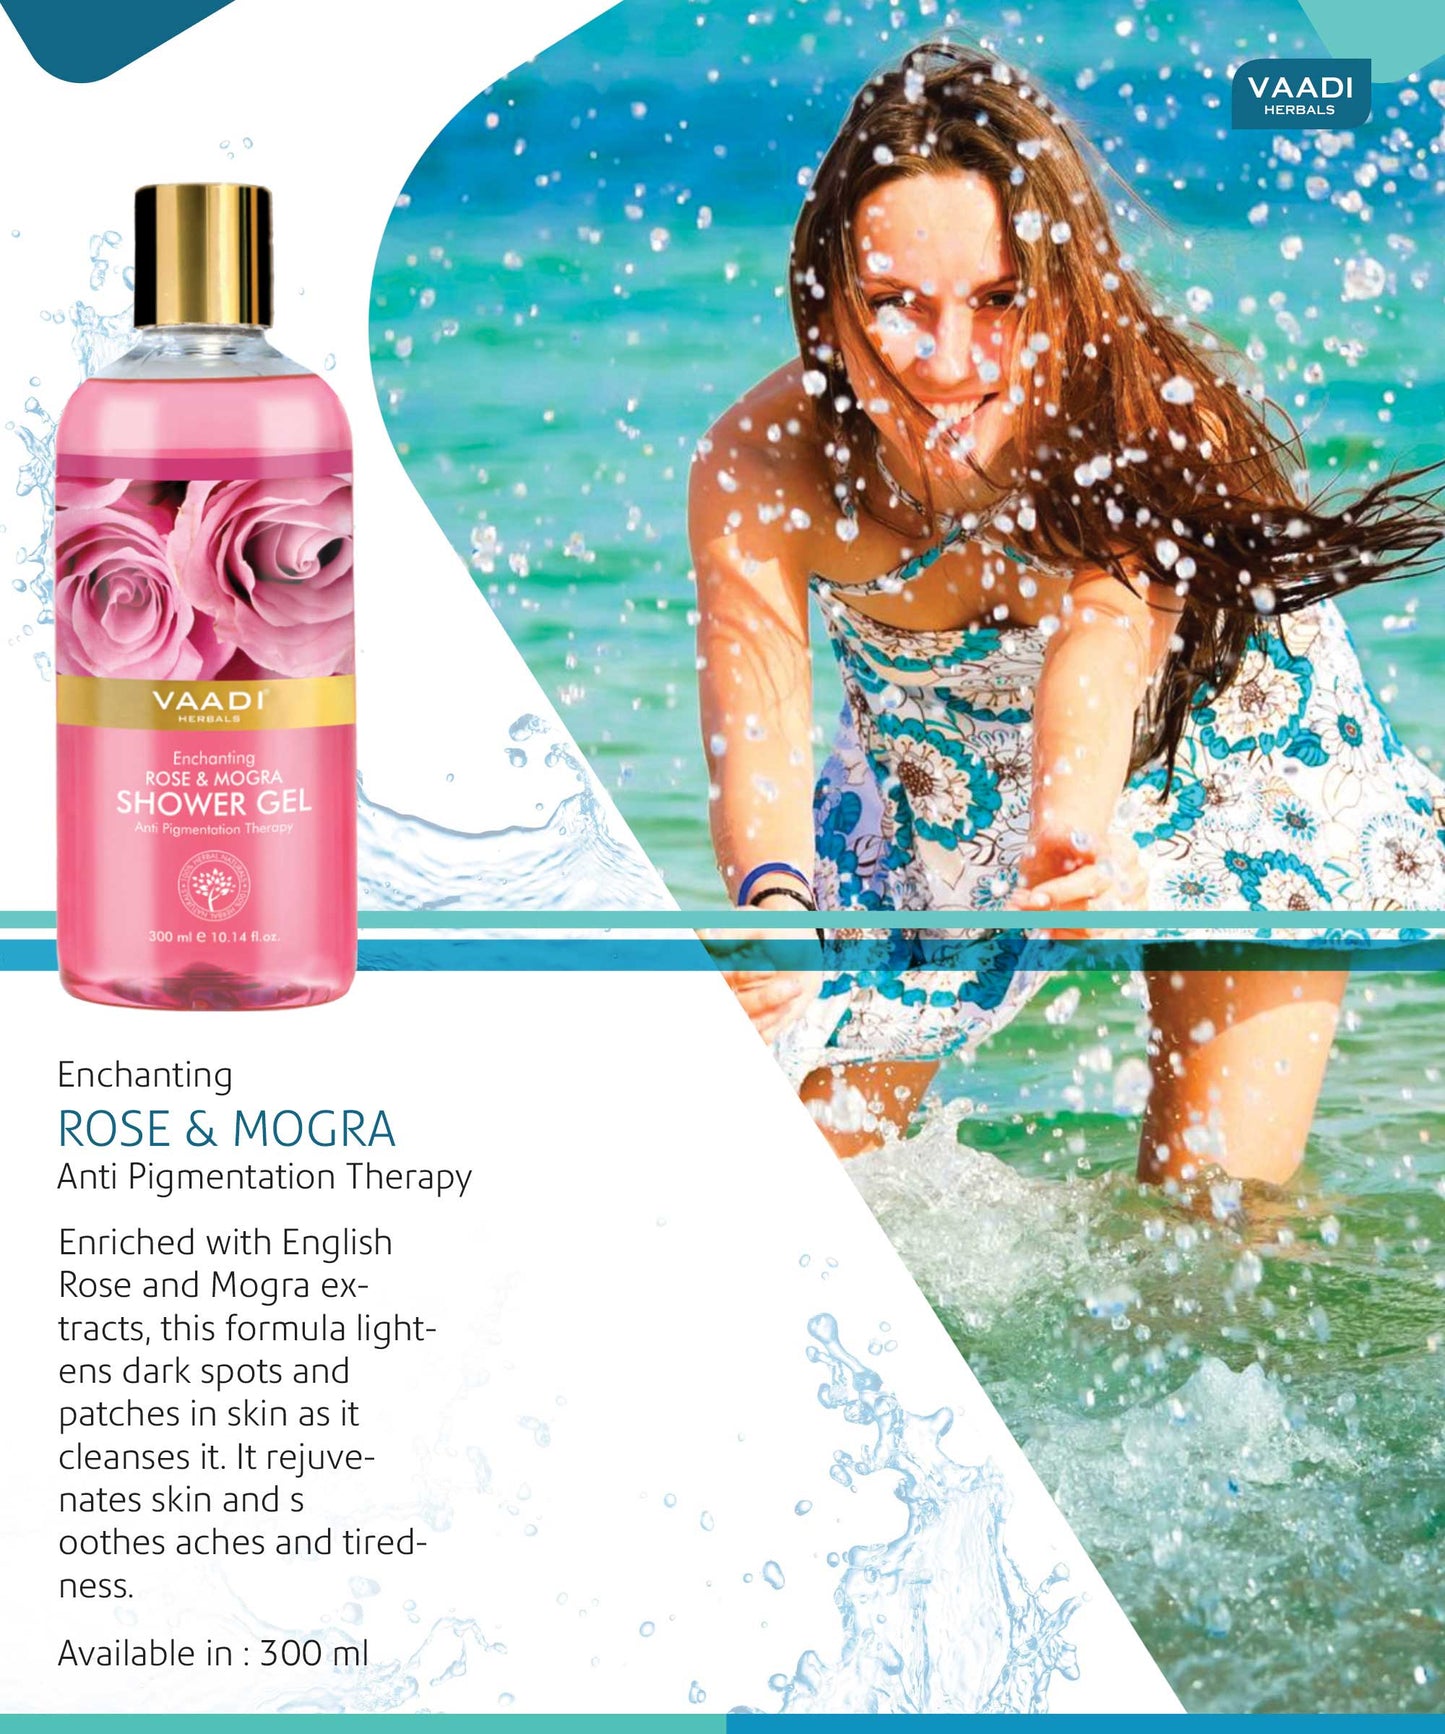 Enchanting Organic Rose & Mogra Shower Gel - Skin Brightening Therapy - Reduce Spots & Patches (3 x 300 ml / 10.2 fl oz)